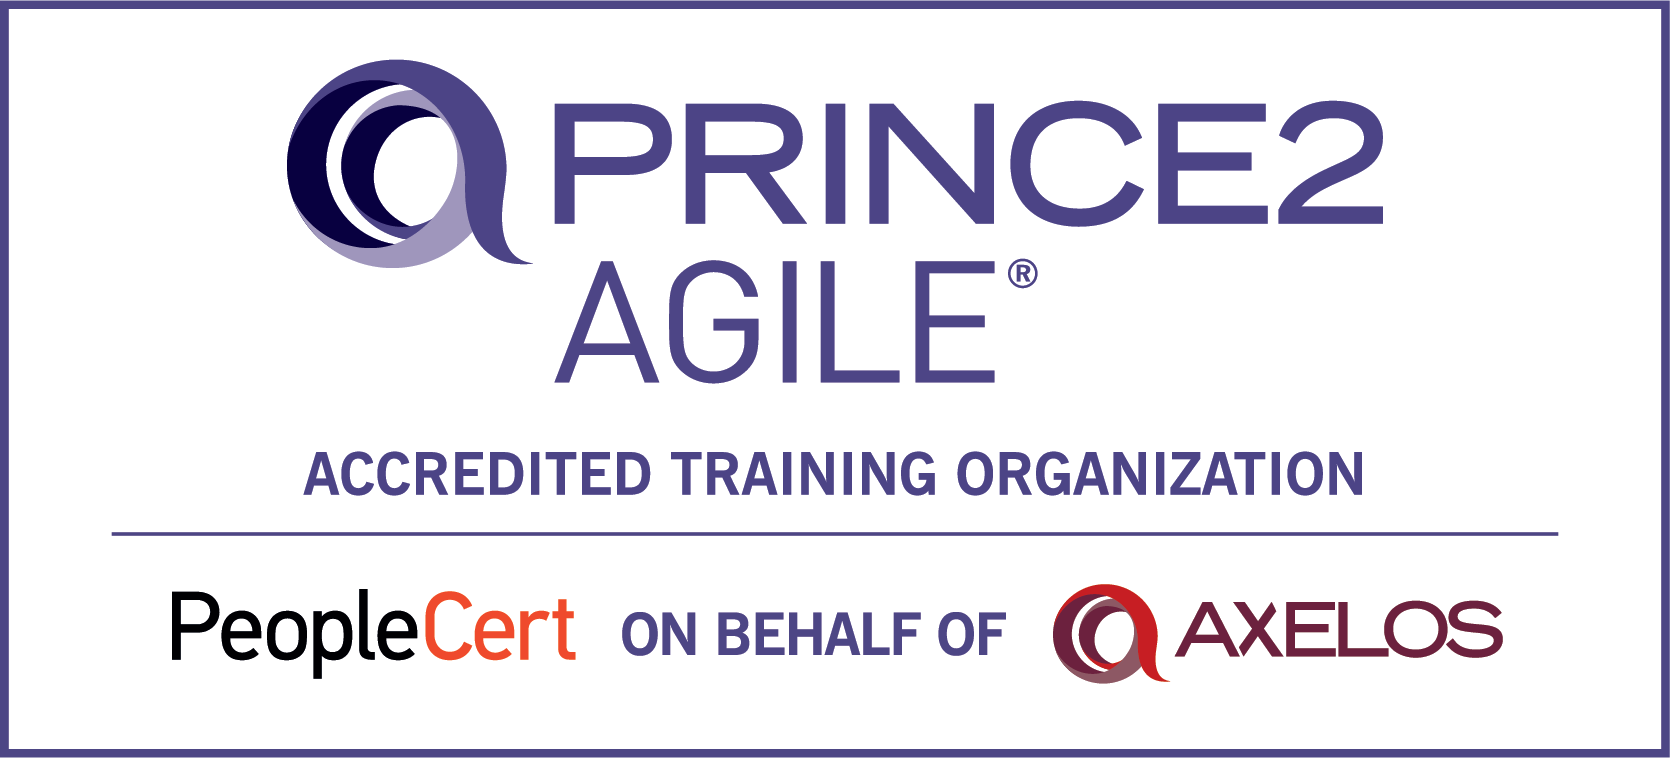 PRINCE2 Agile Accredited Training Organisation logo